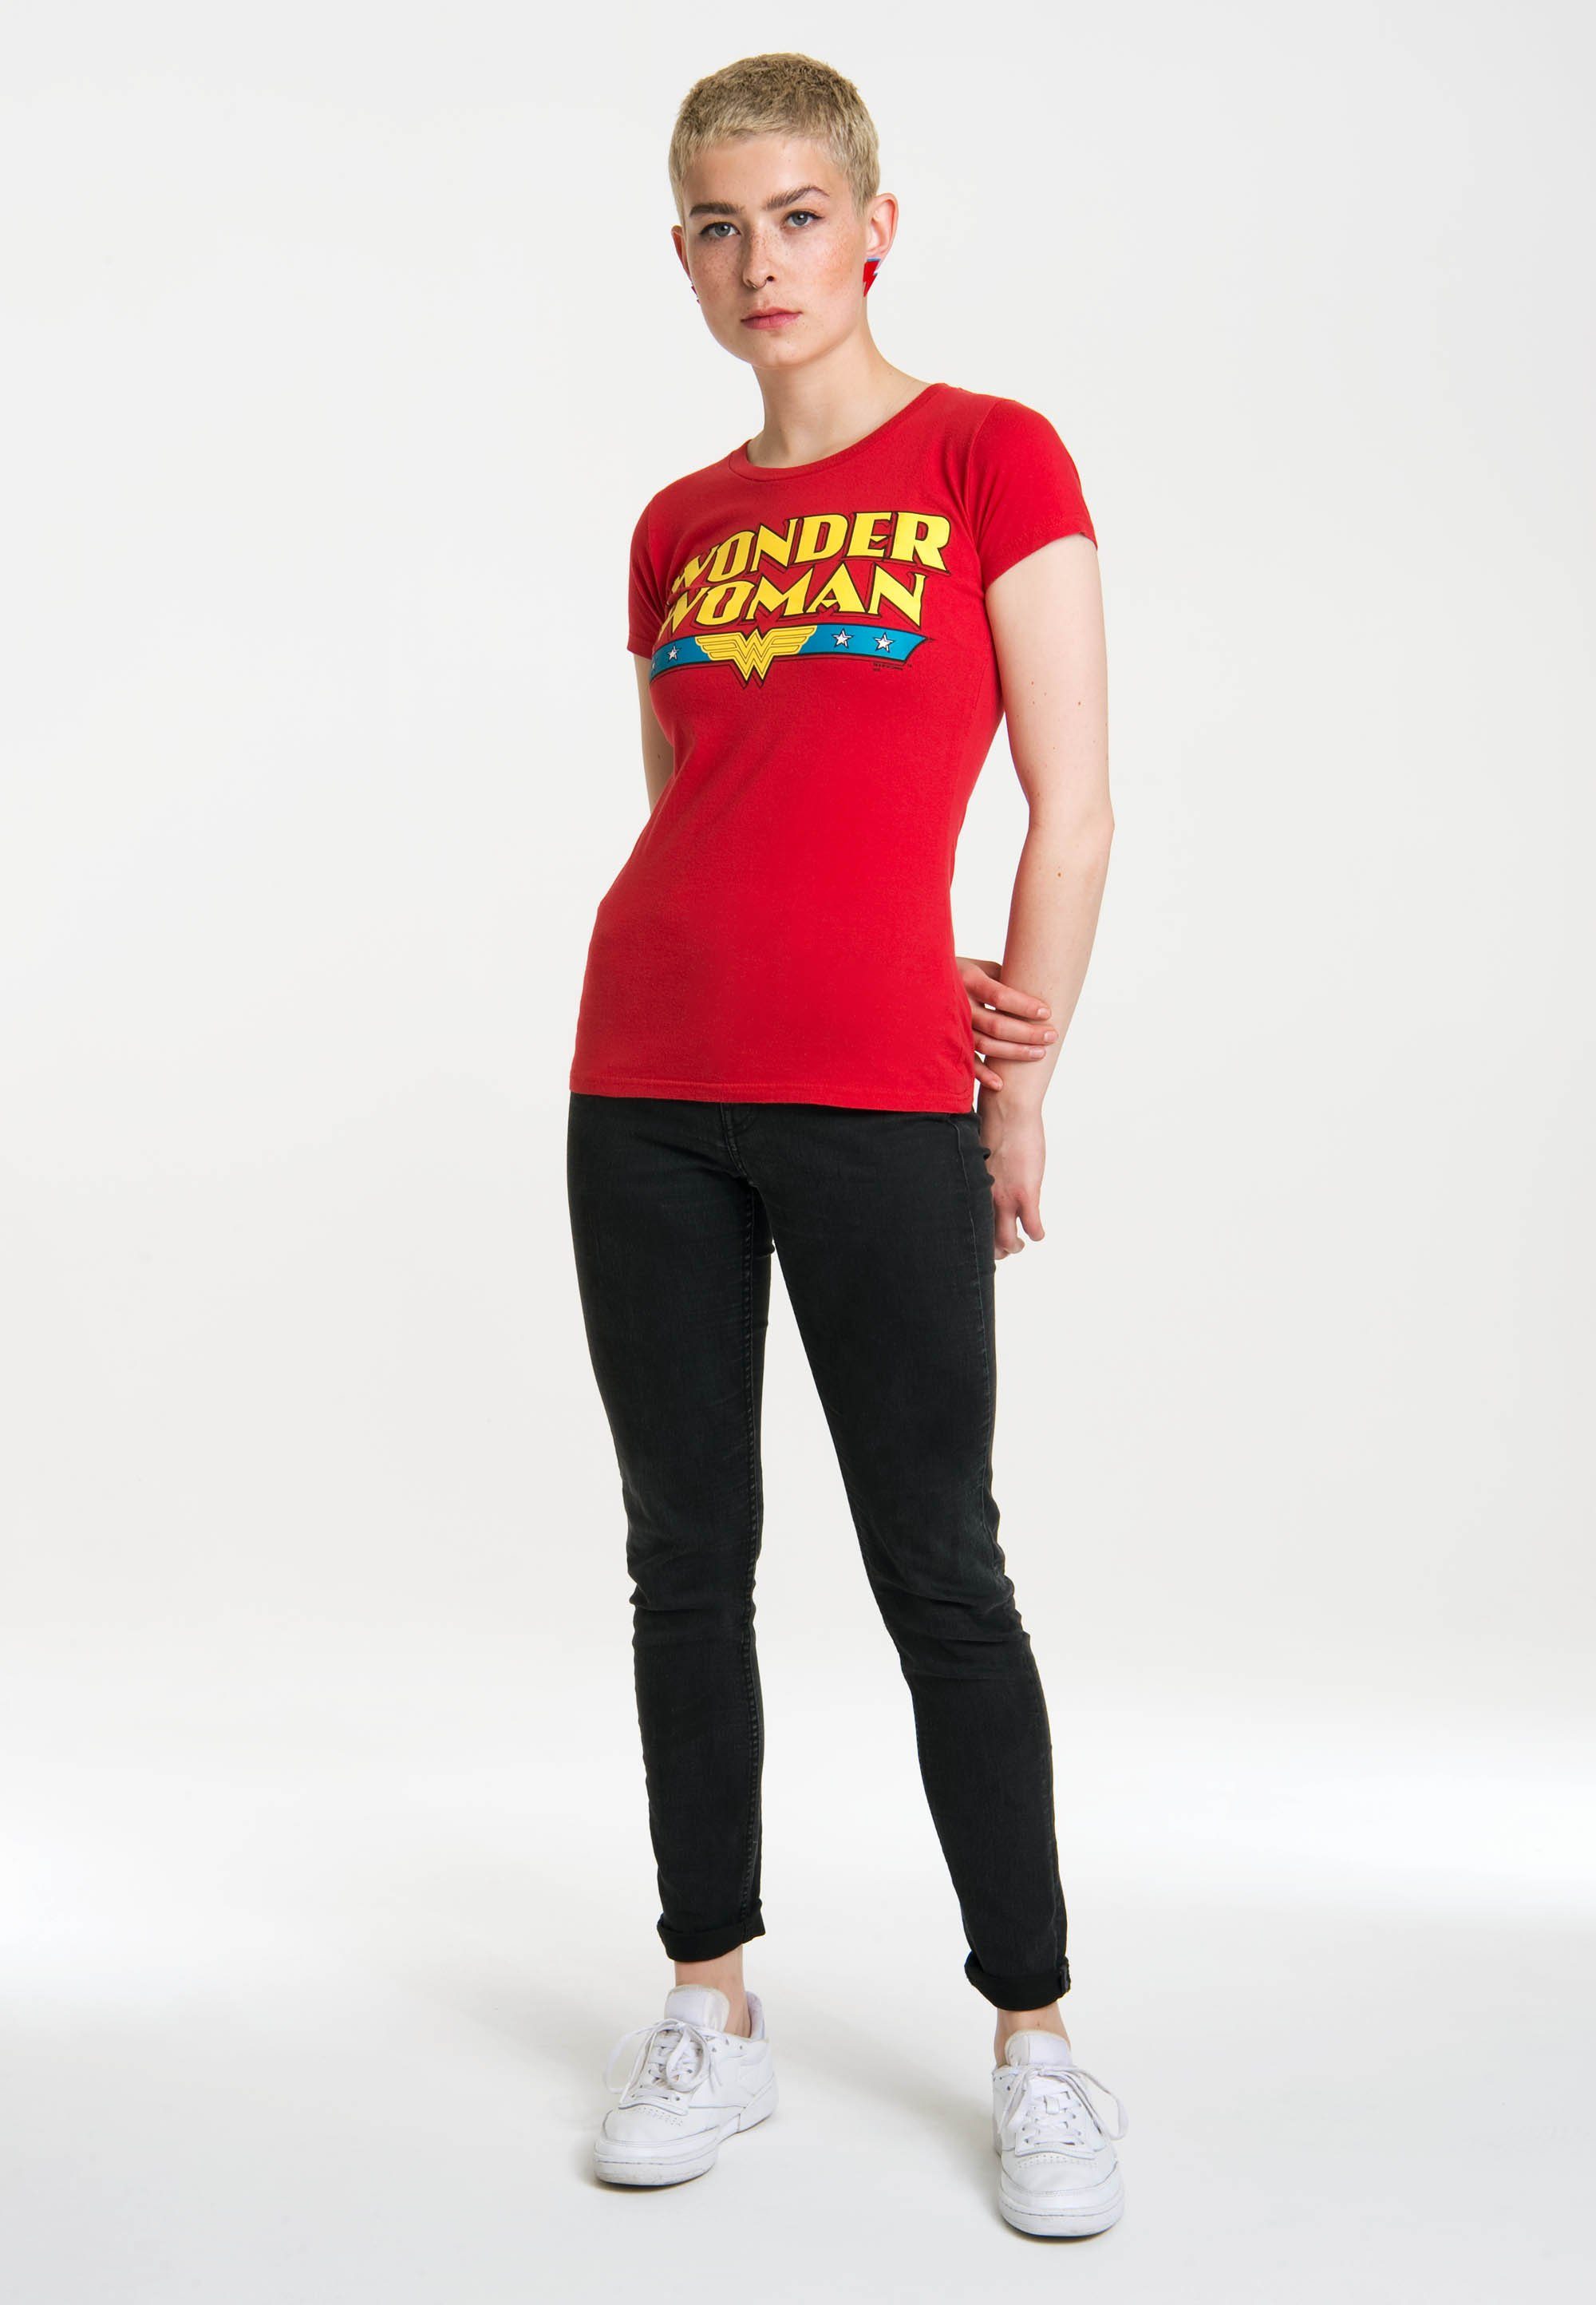 LOGOSHIRT T-Shirt lässigem Vintage-Print Wonder Woman mit